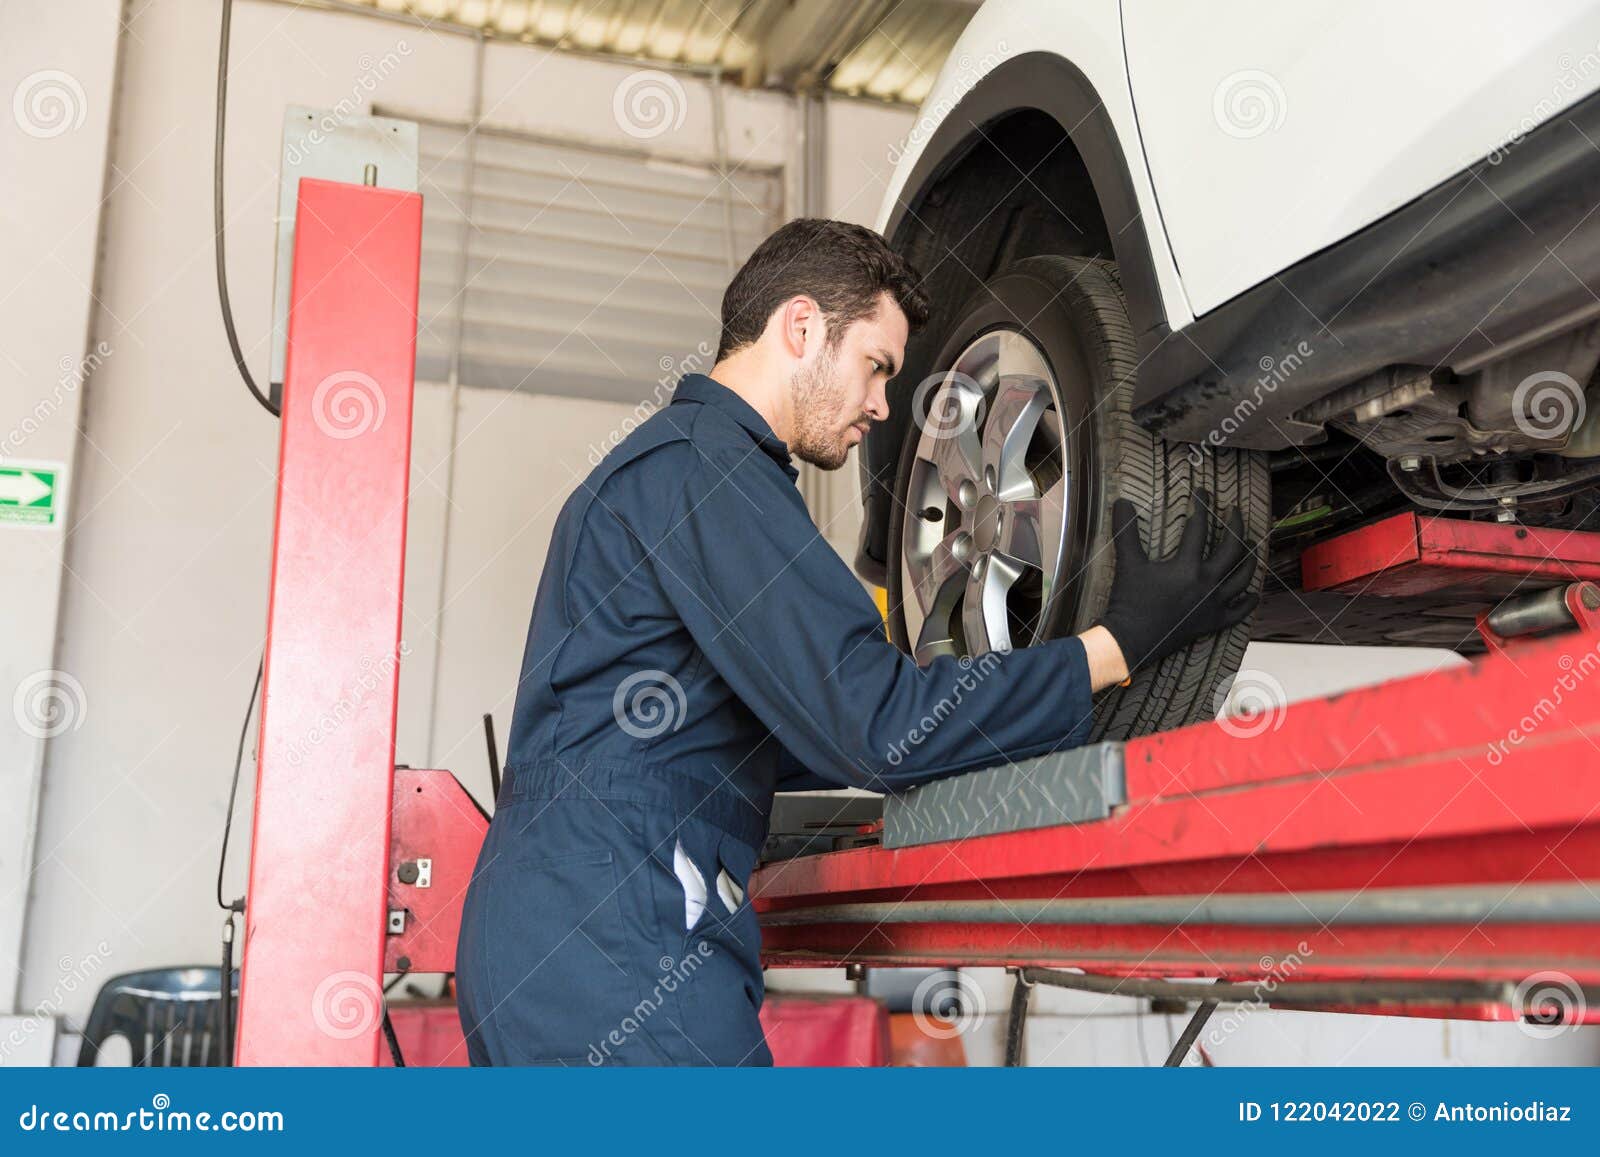 Auto Mechanic Adjusting Car Tire In Repair Shop Stock Photo Image of